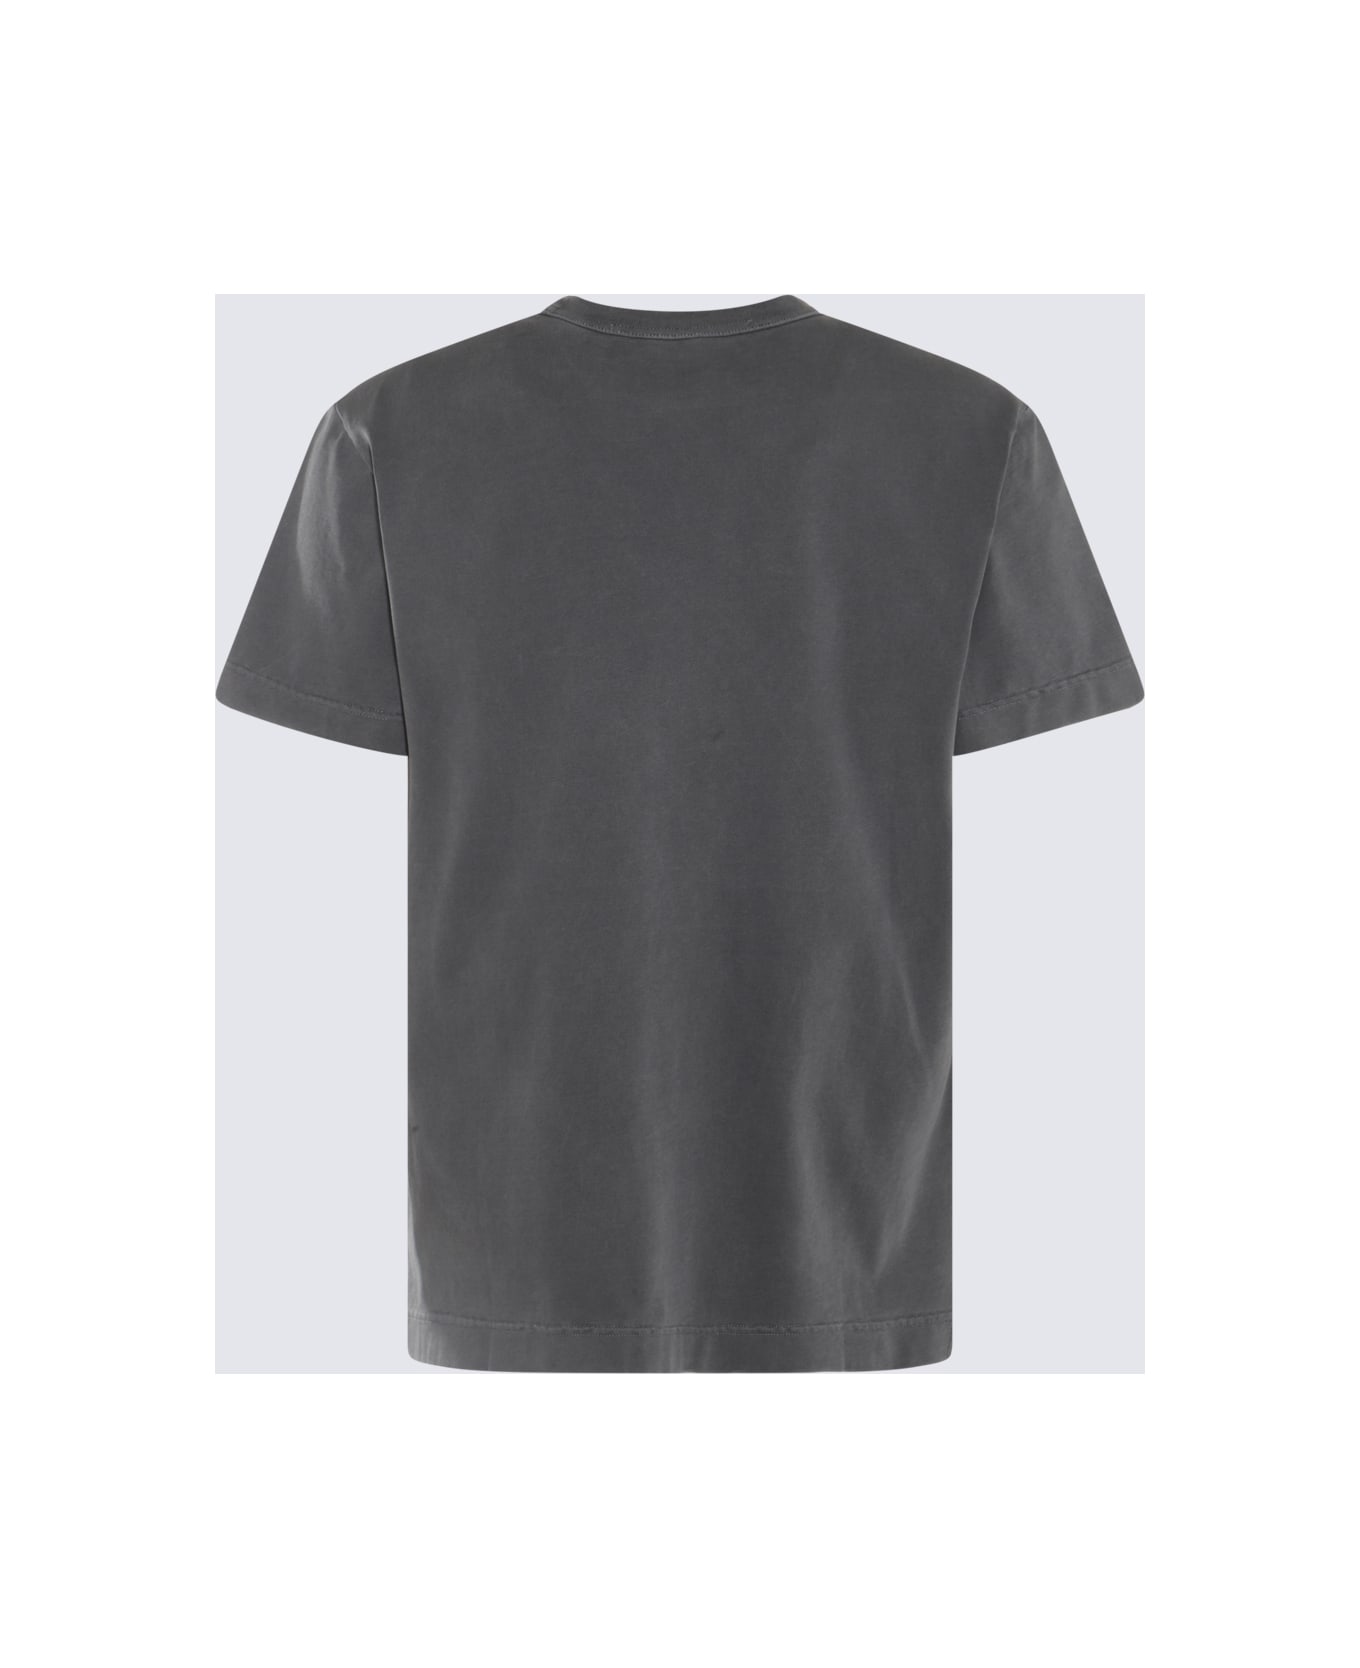 Alexander Wang Grey Cotton T-shirt - WASHED BLACK